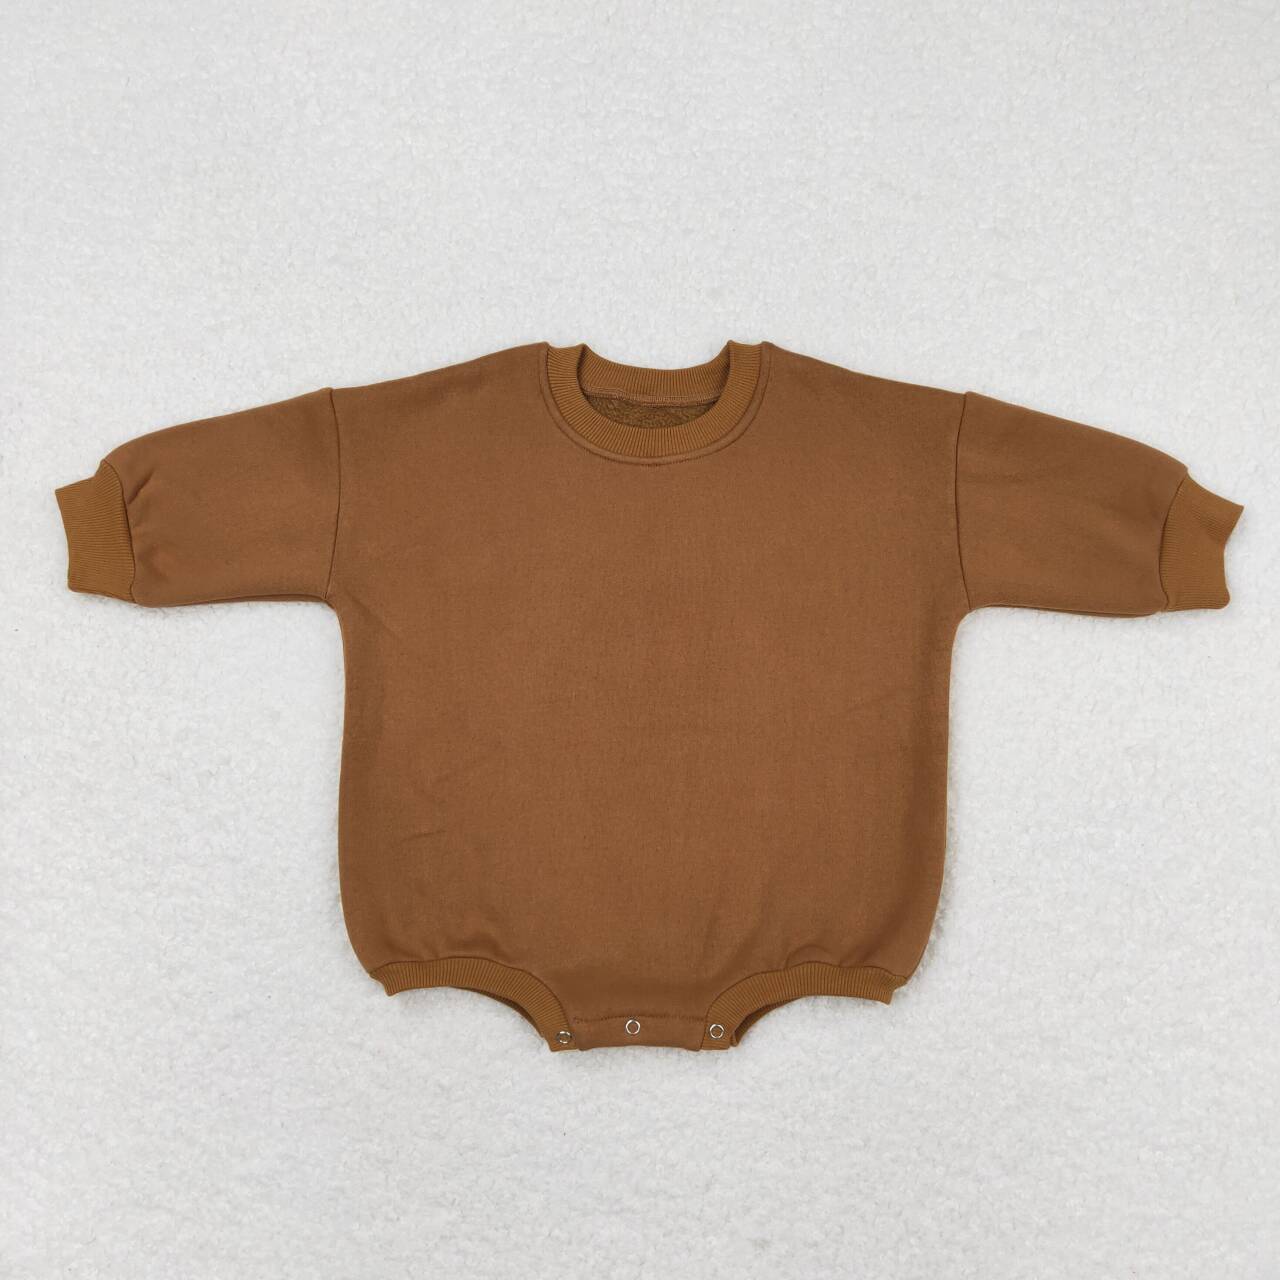 LR0959 Brown Color Cotton Long Sleeve Baby Sweatshirt Romper